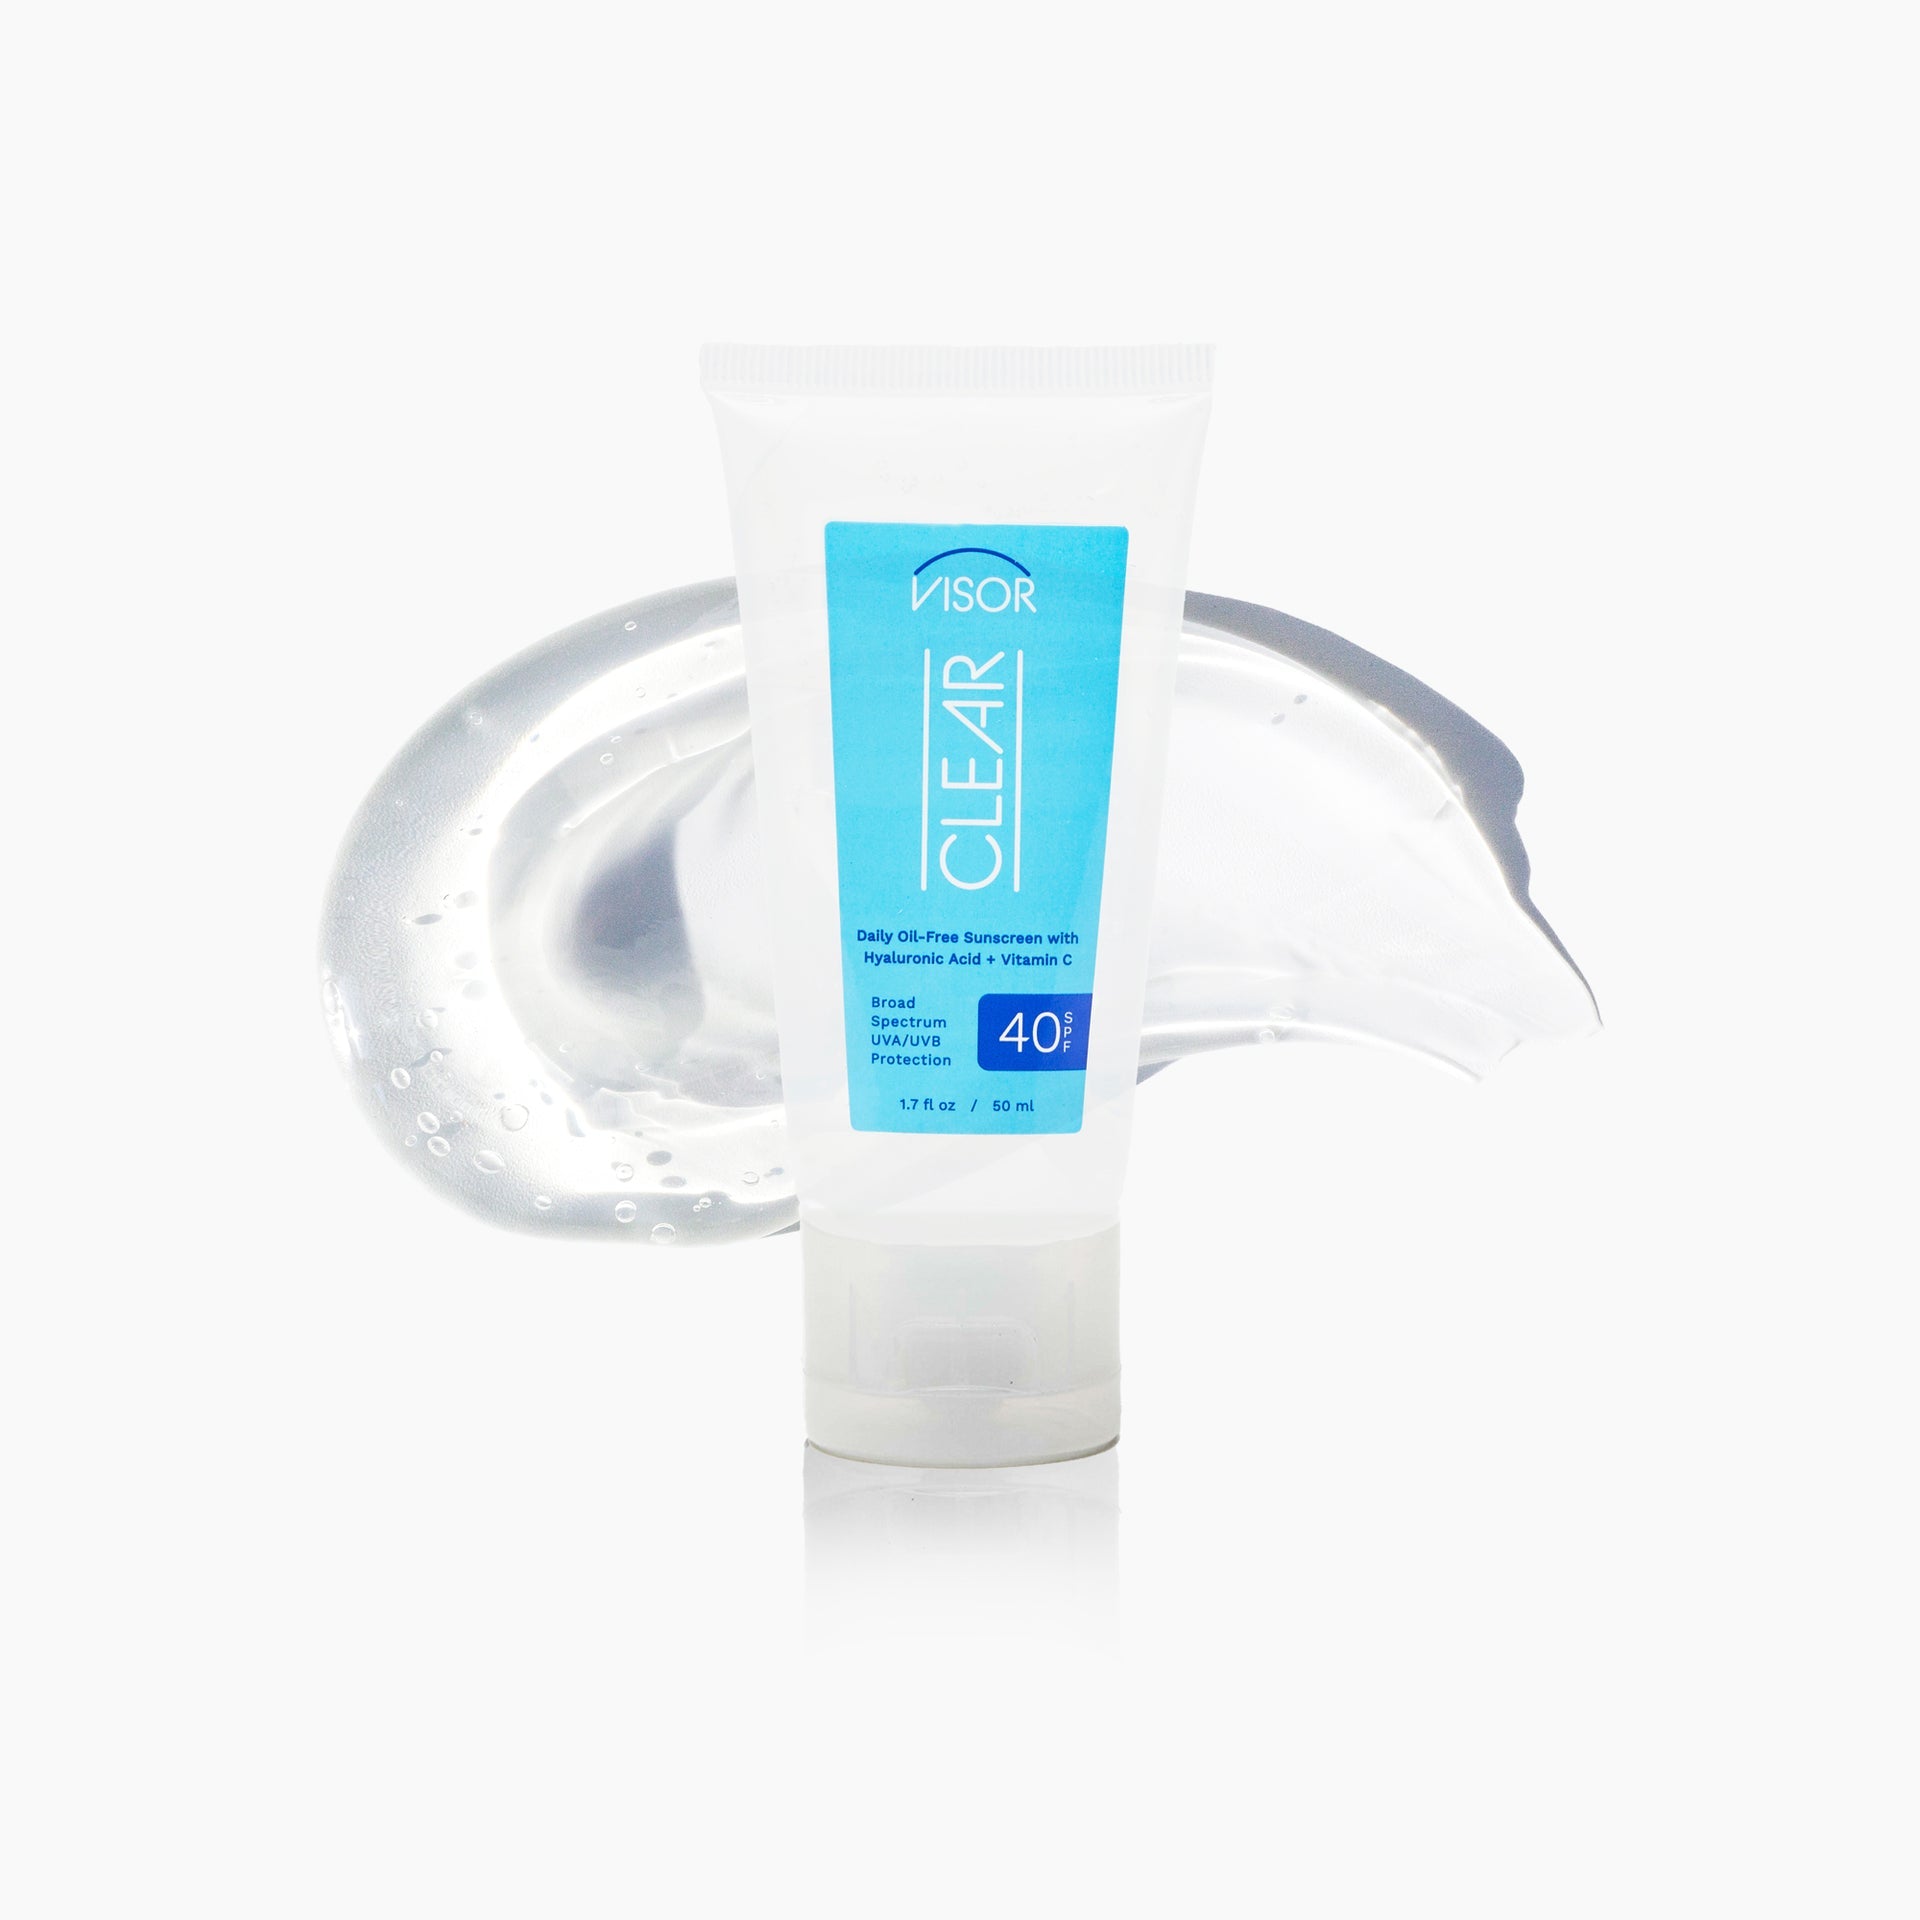 Visor Clear Oil Free Suncreen 6.6 oz Accessories Visor Skin Care   